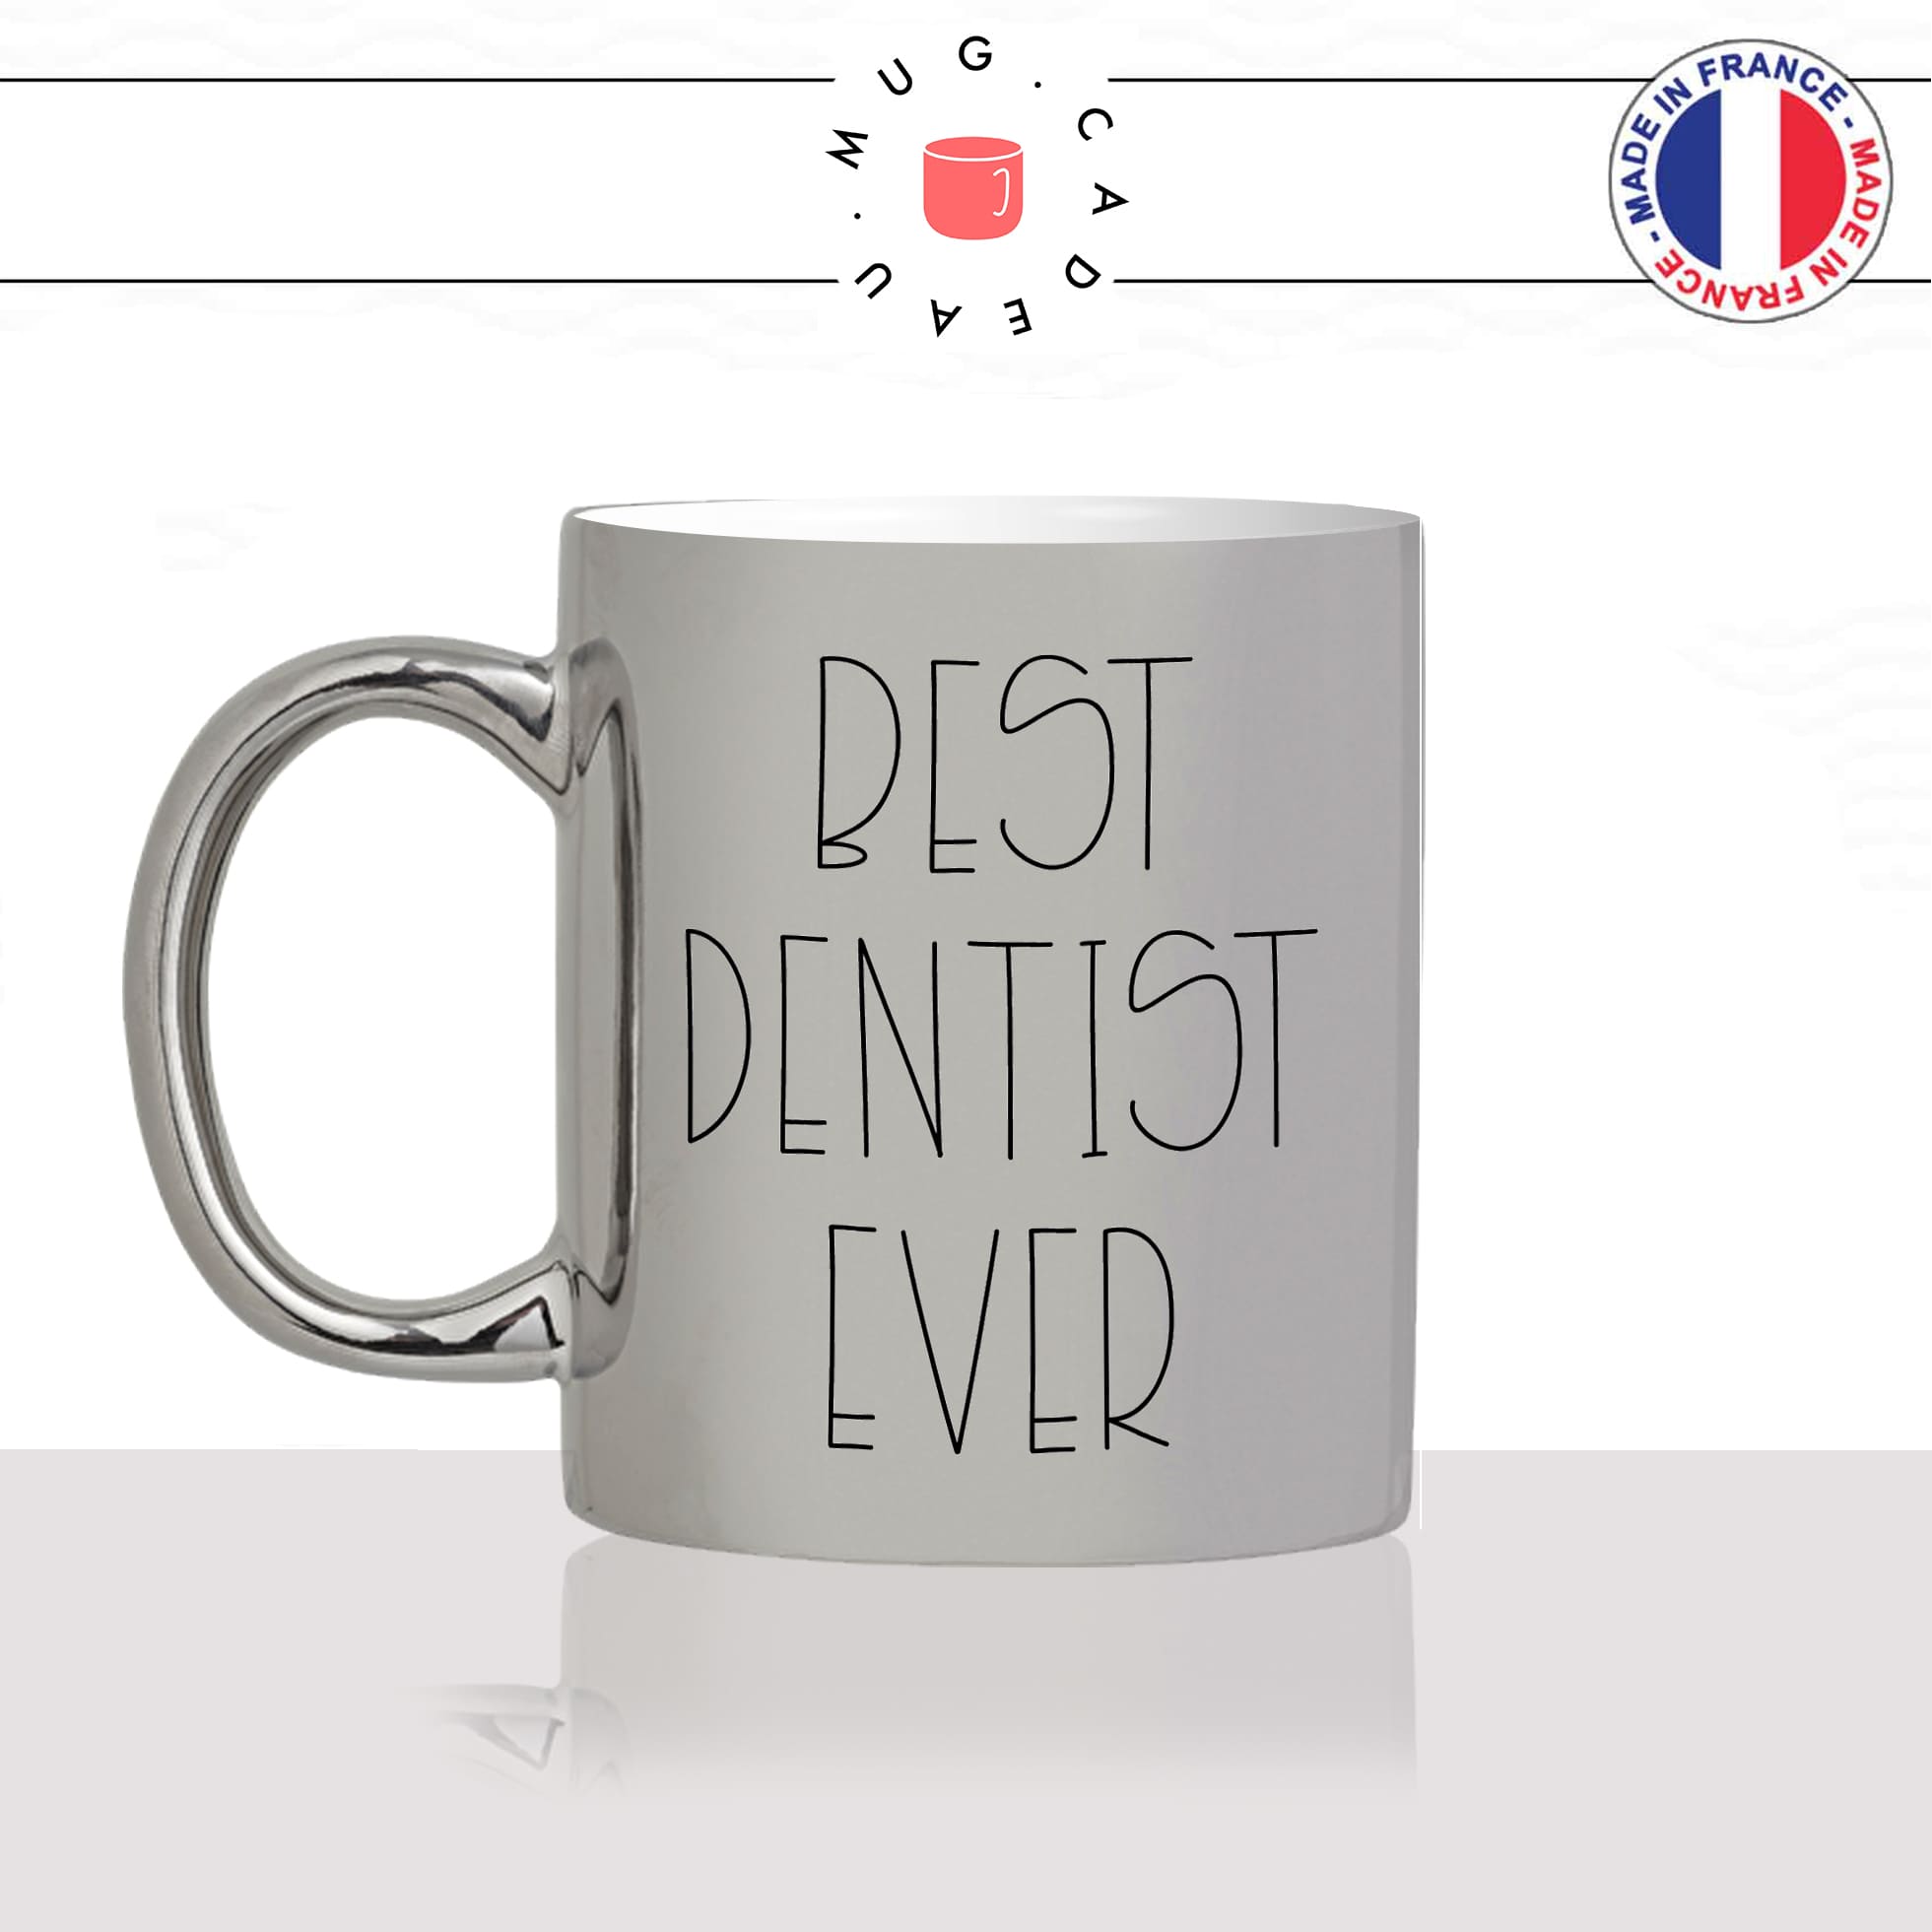 mug-tasse-argenté-silver-meilleur-dentiste-best-dentist-ever-travail-medecin-dent-humour-métier-fun-café-thé-idée-cadeau-original